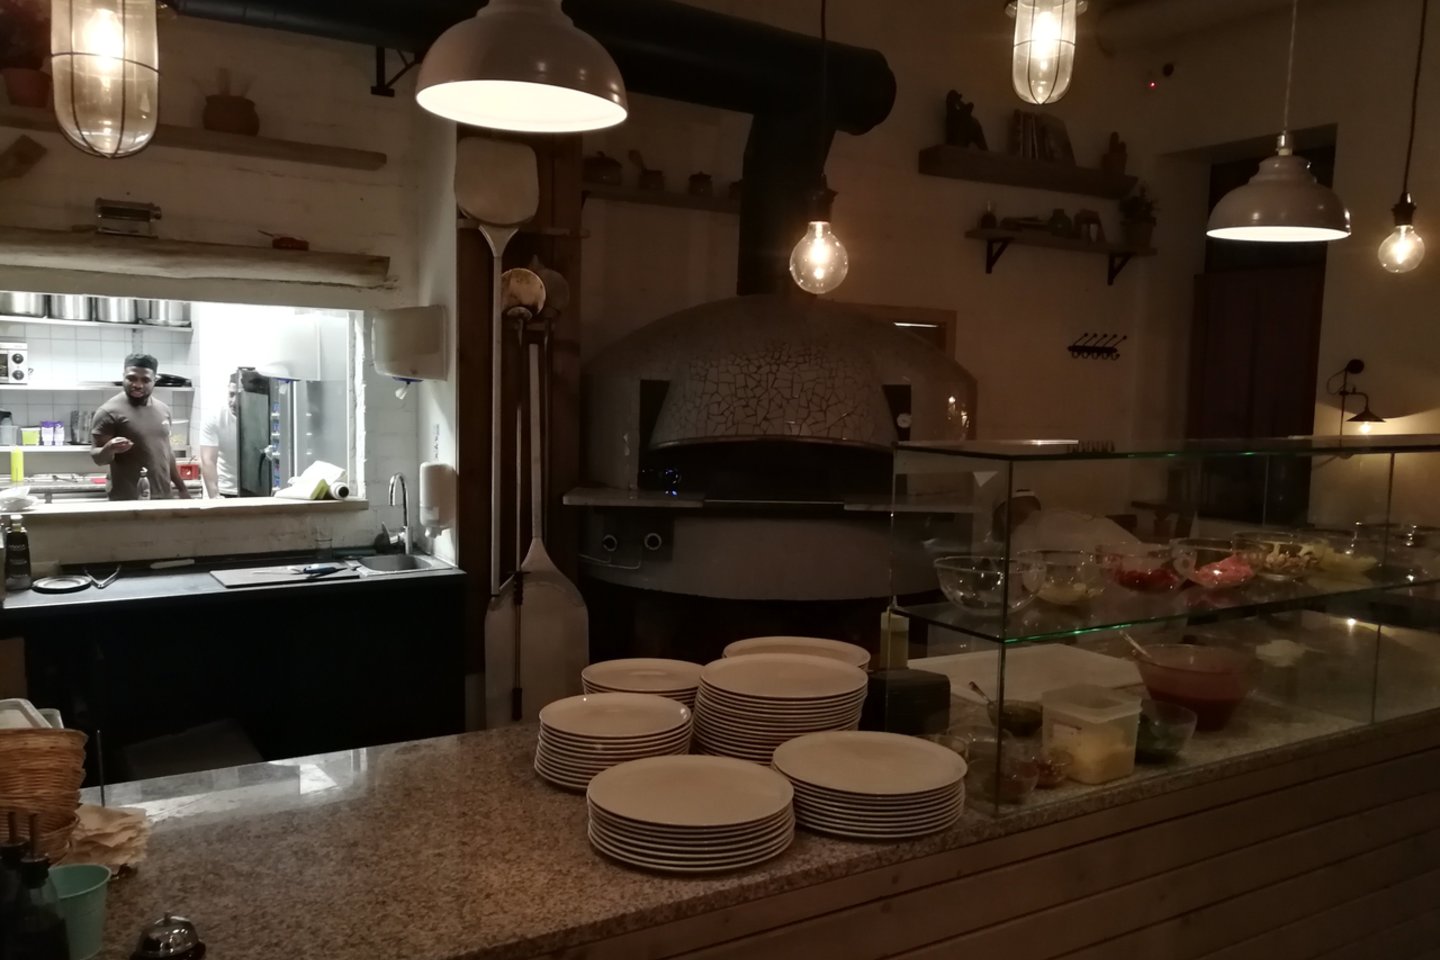 Itališkas restoranas „Casa della pasta“ Kaune.<br> Nuotr. iš „Riebus katinas“.